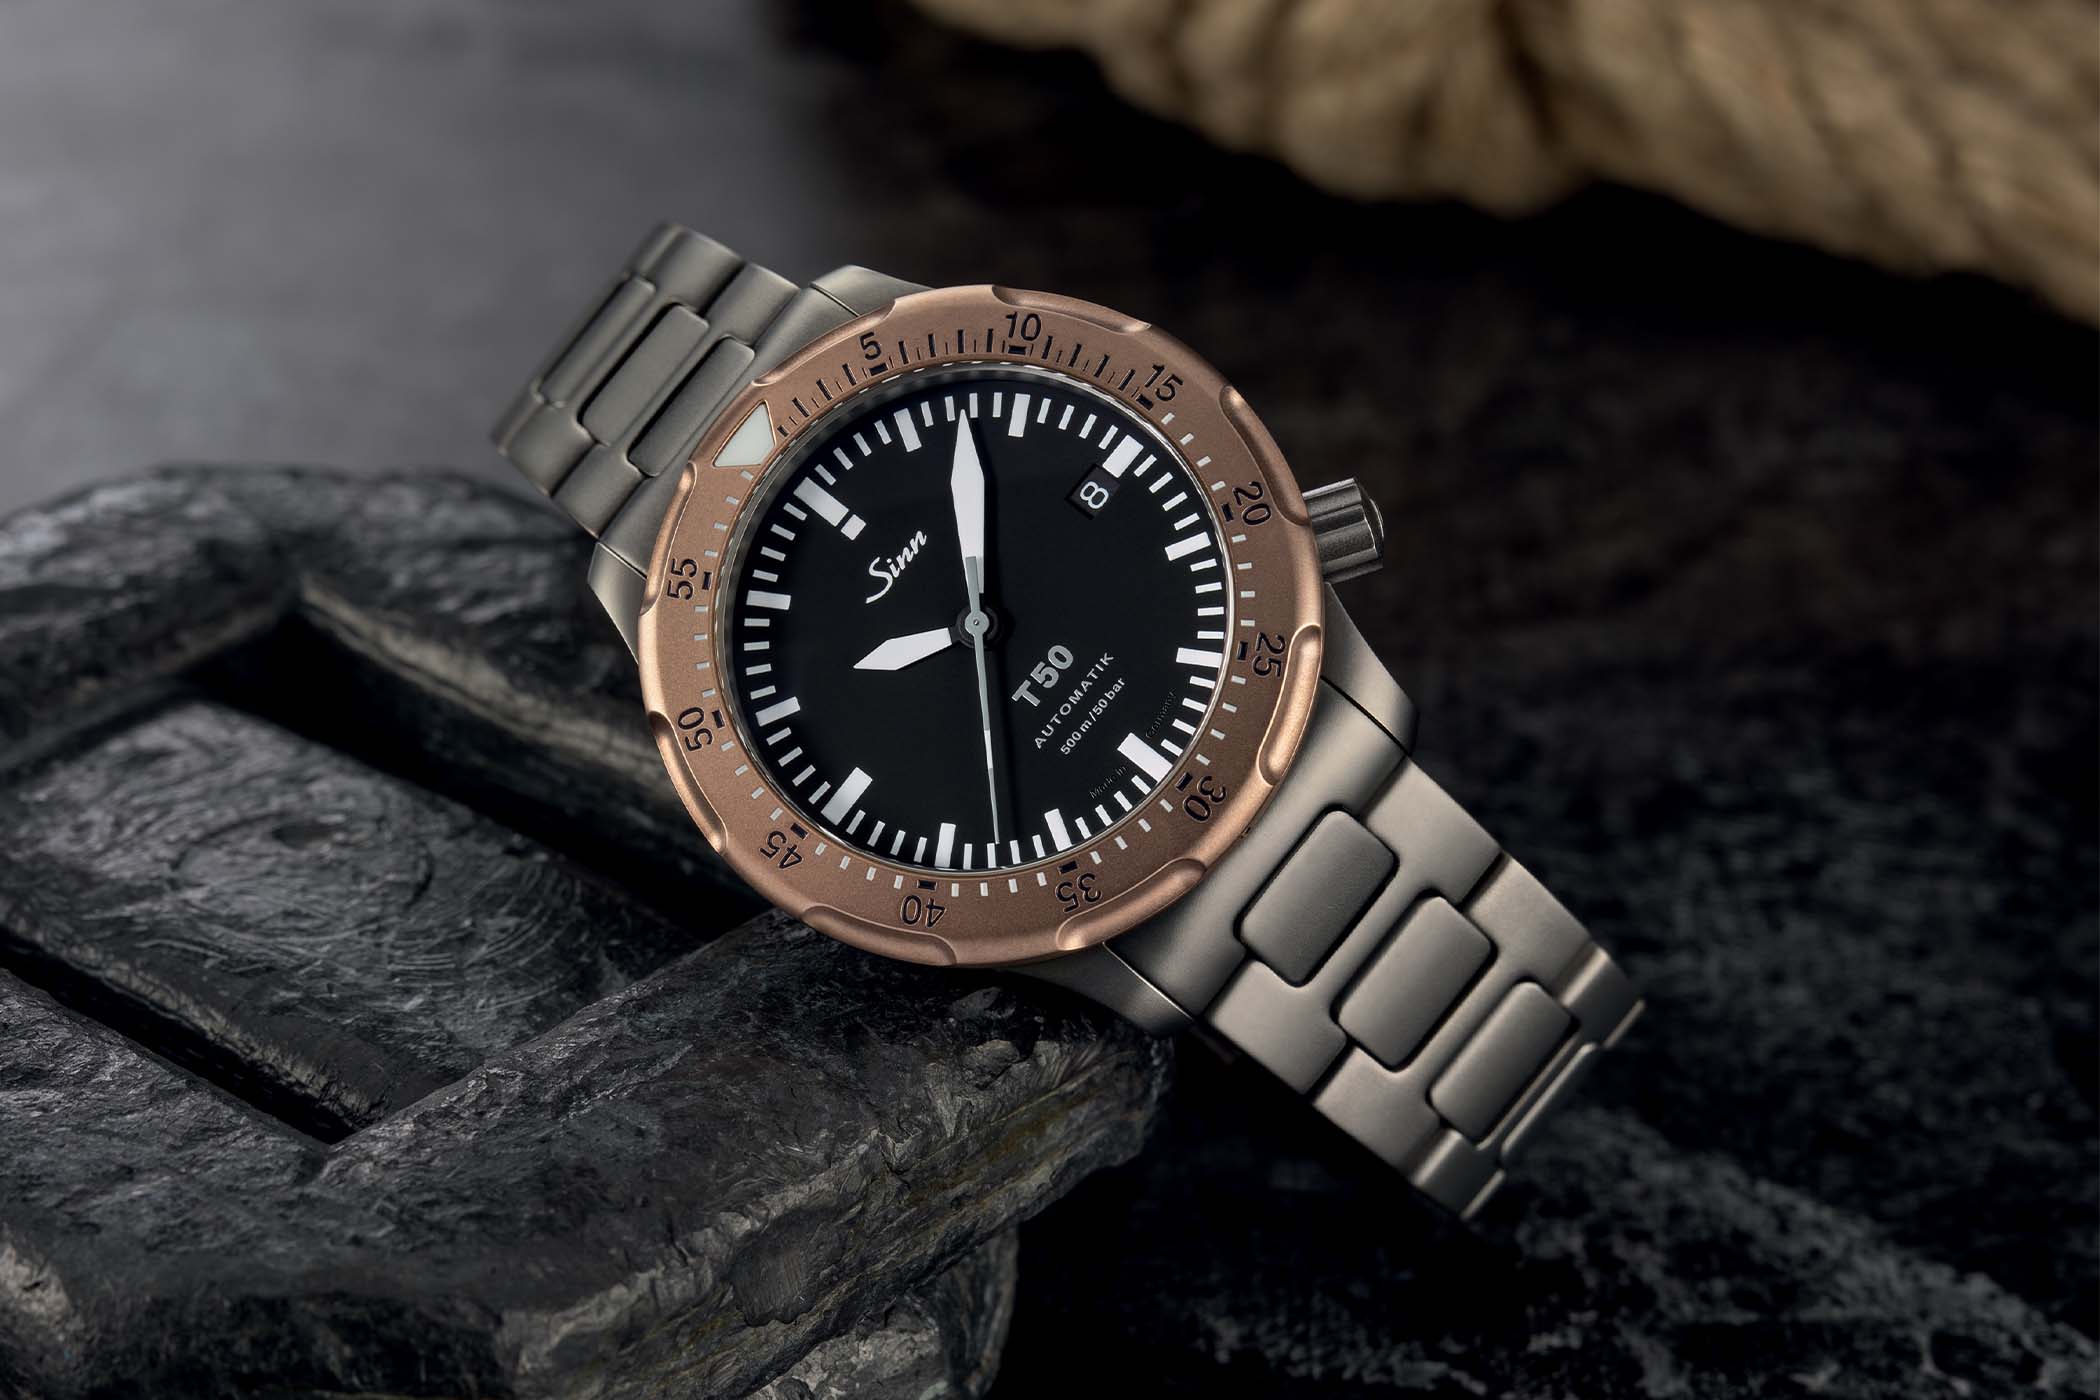 Sinn T50 Dive Watch Titanium